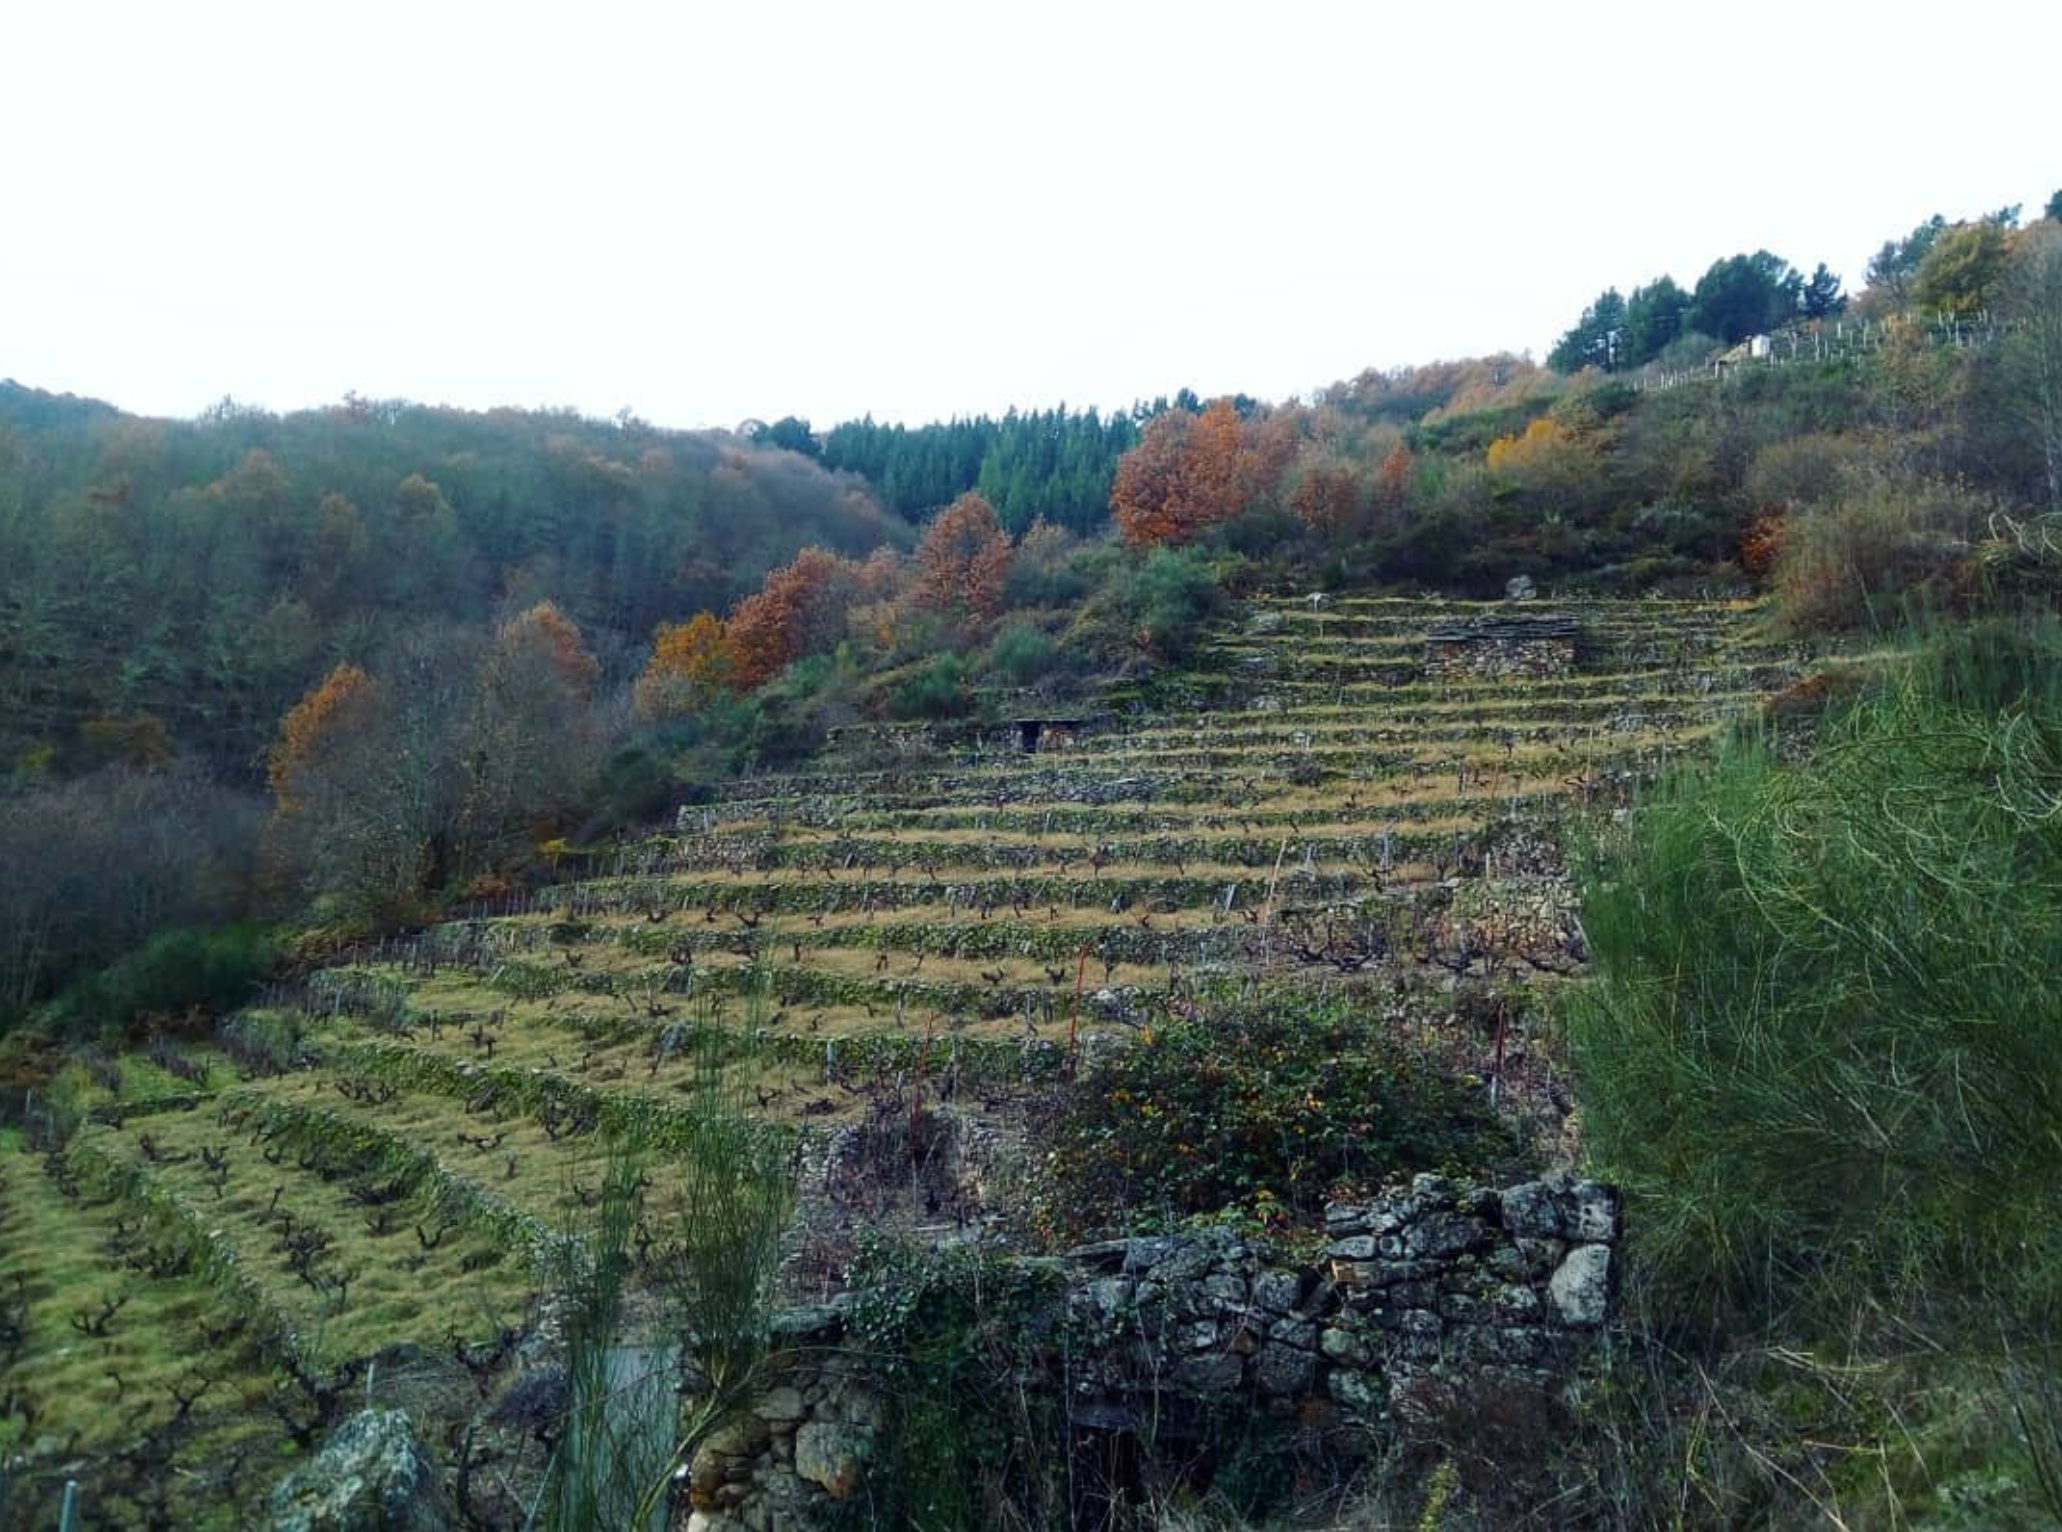 Camino de la Frontera 2018 - Daterra Viticultores (Laura Lorenzo) - Ribeira Sacra, Spain 75cl